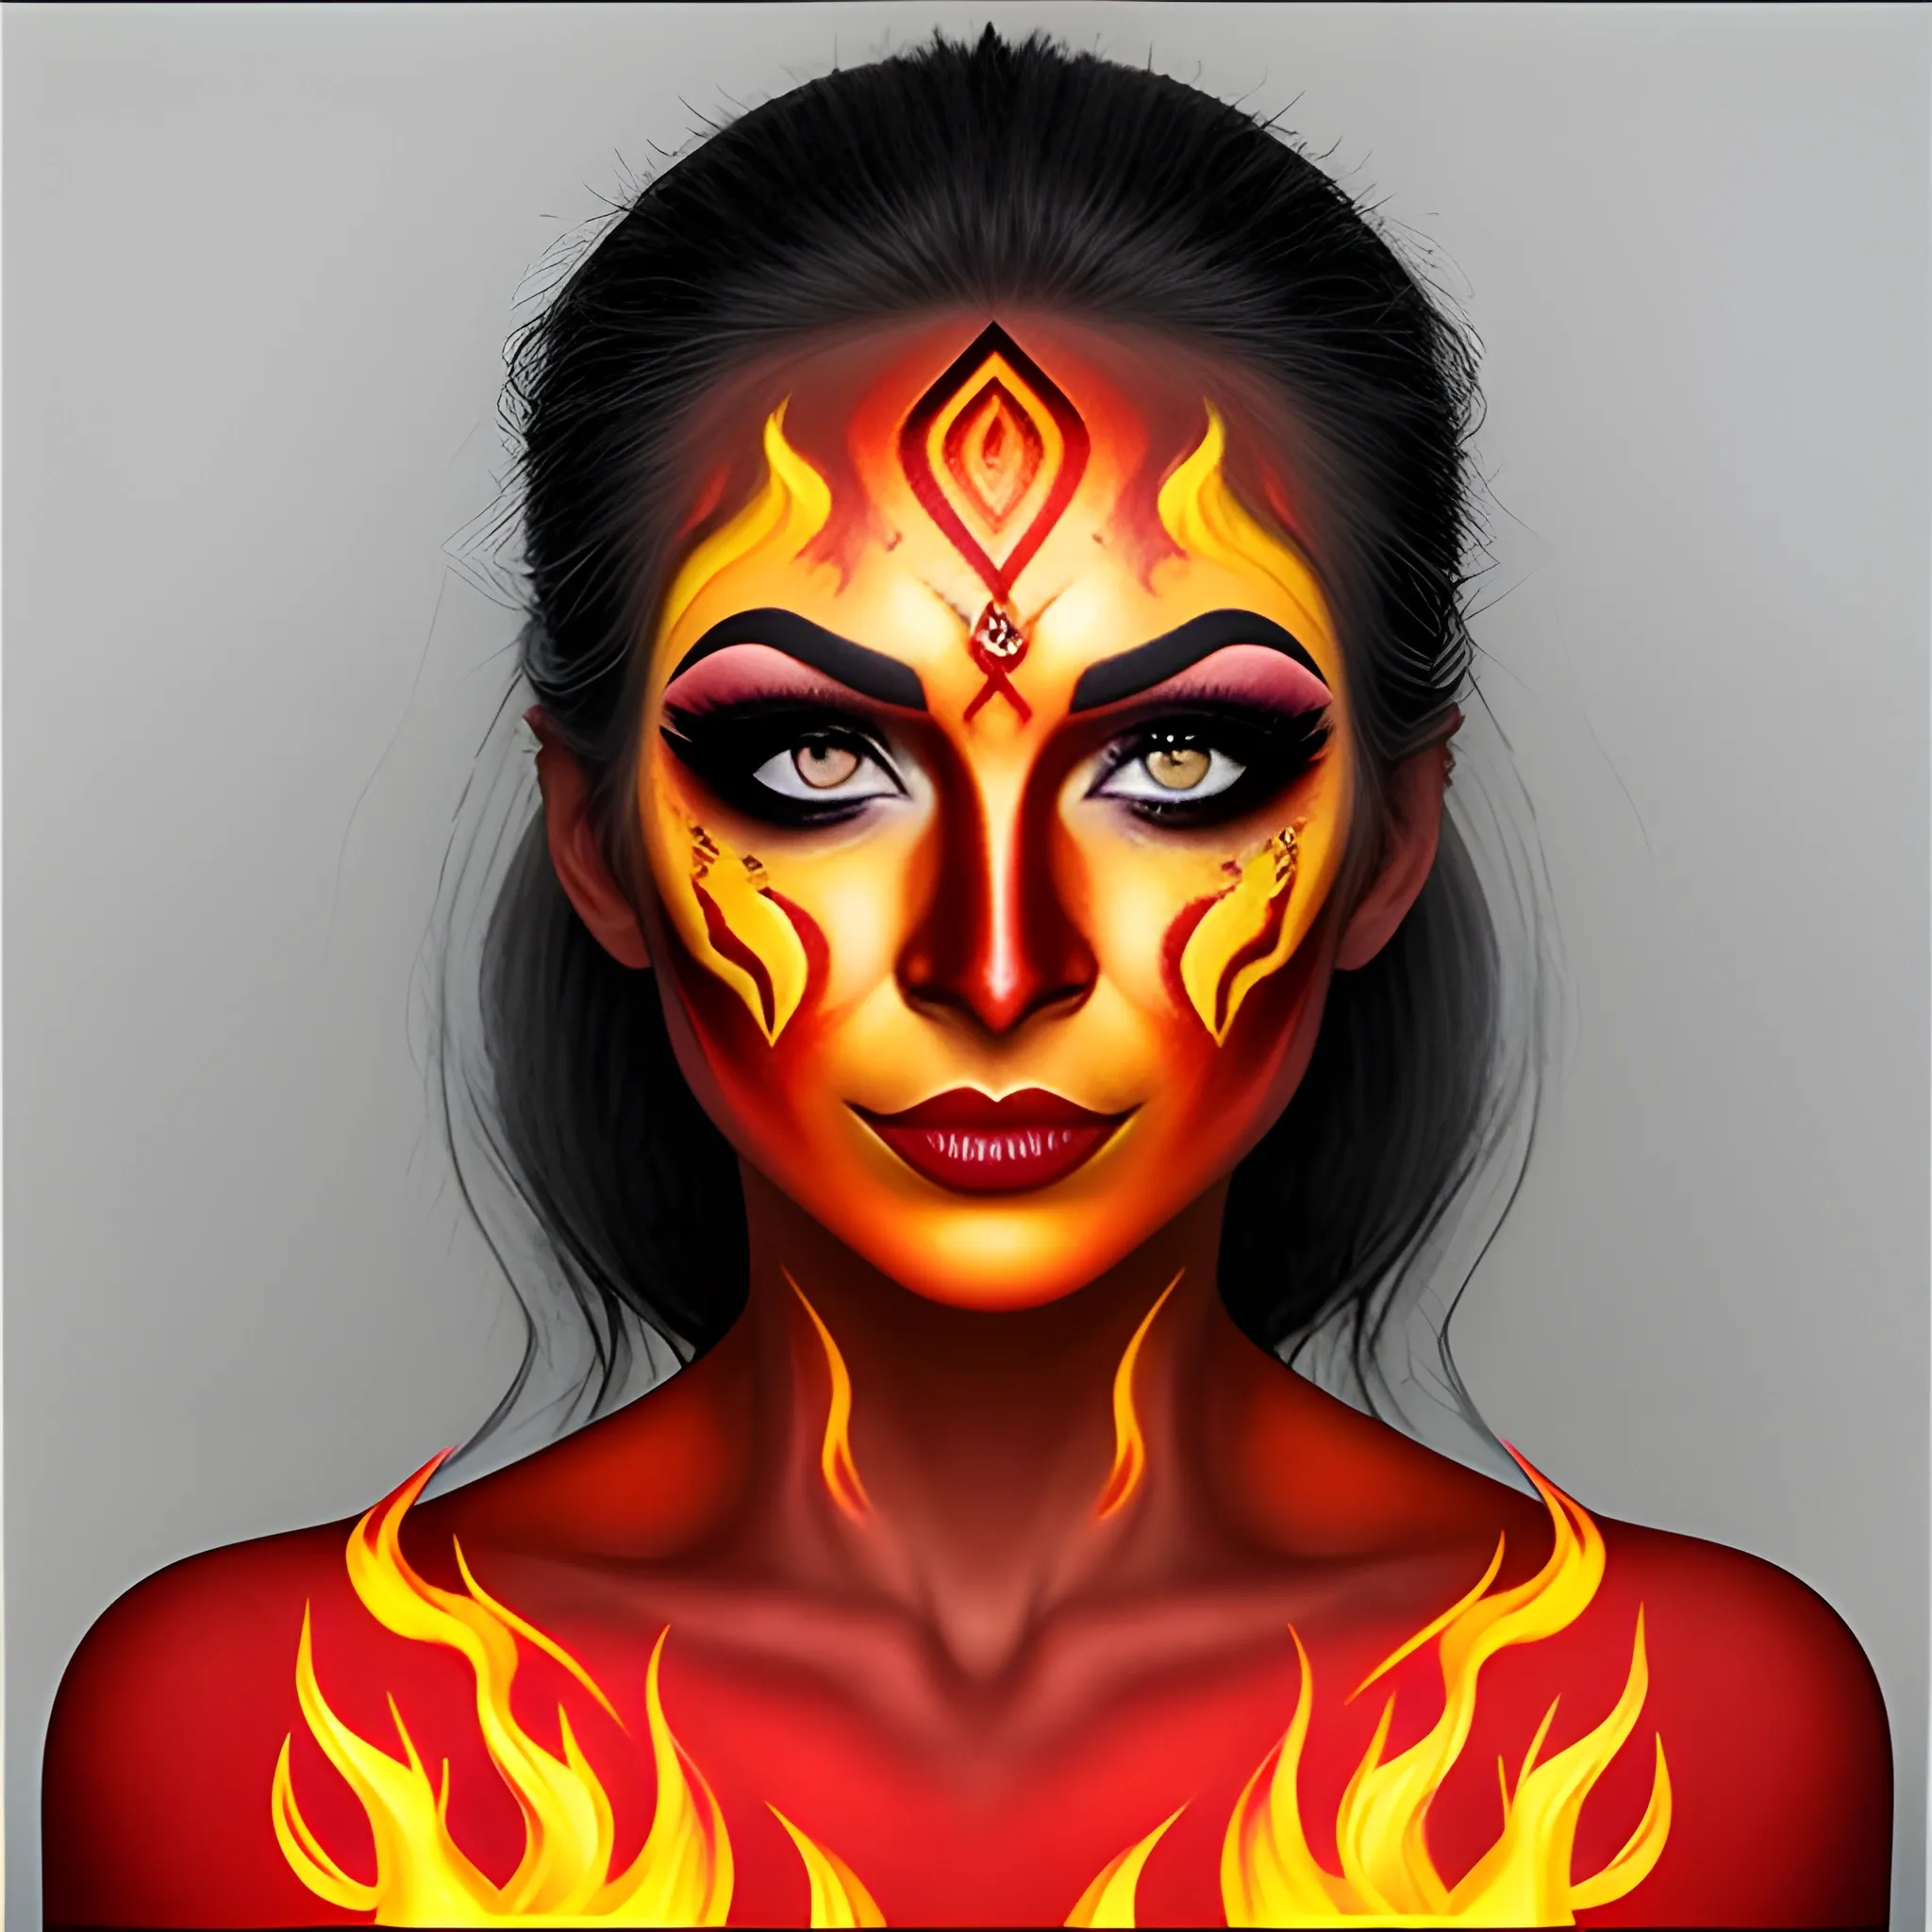 fire woman makeup on face